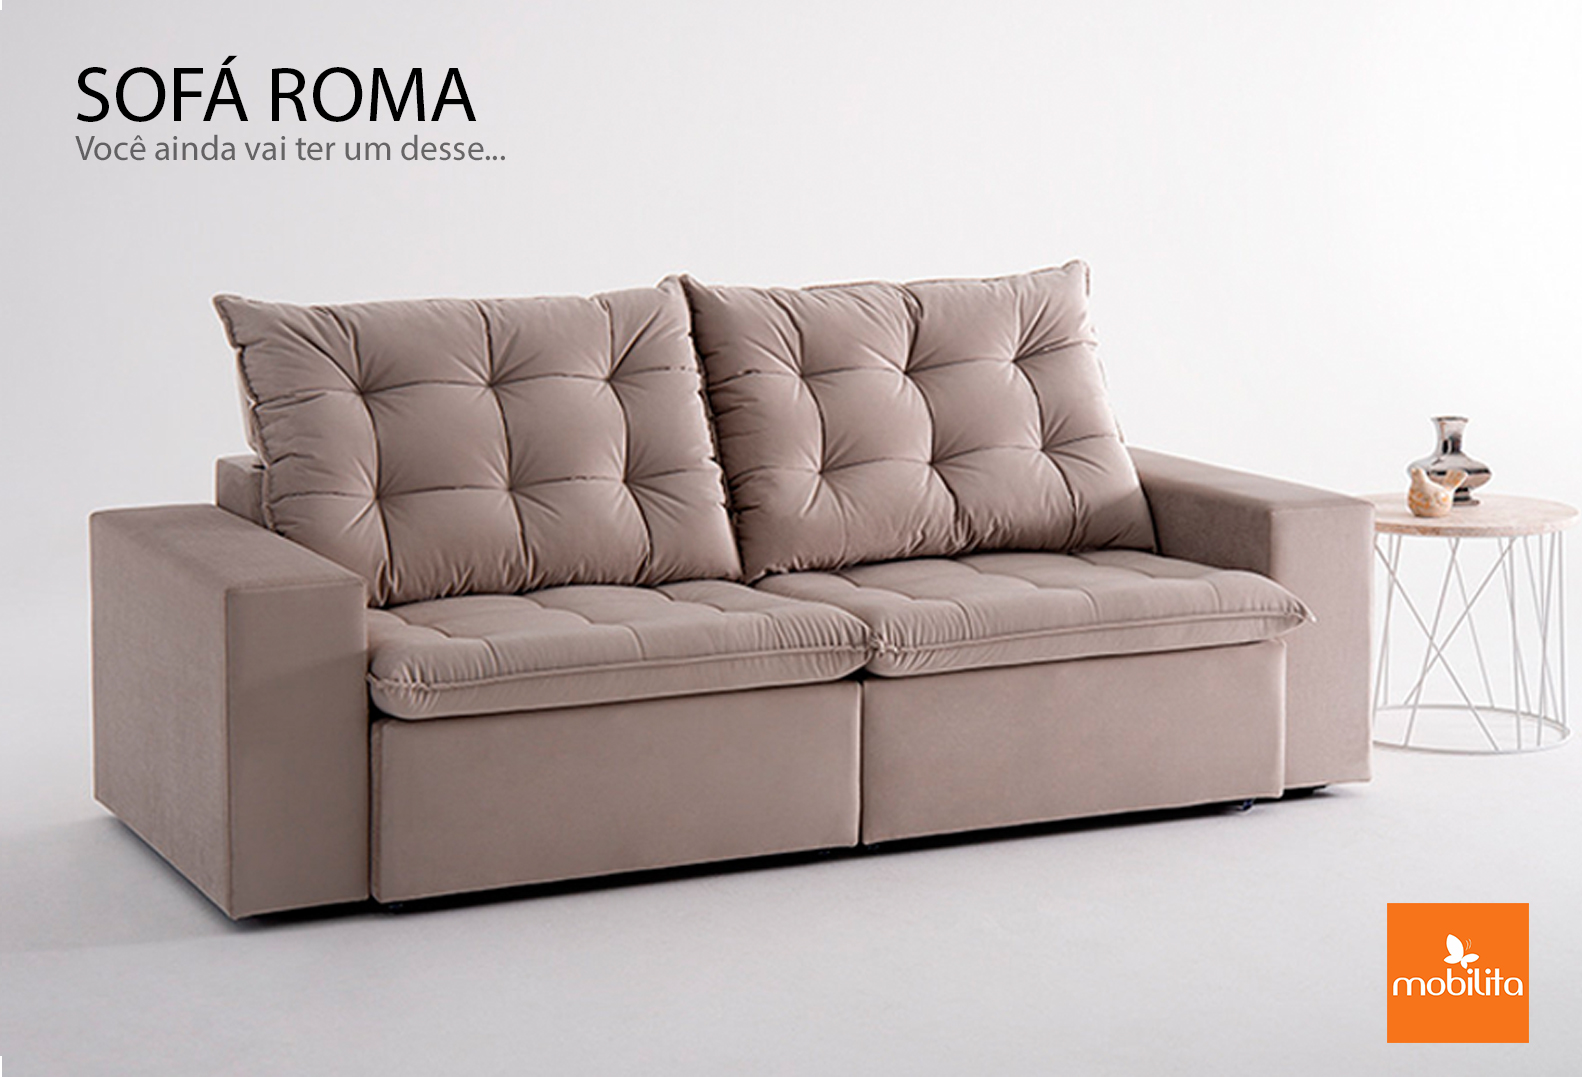 Sofá Roma - Conforto & Design